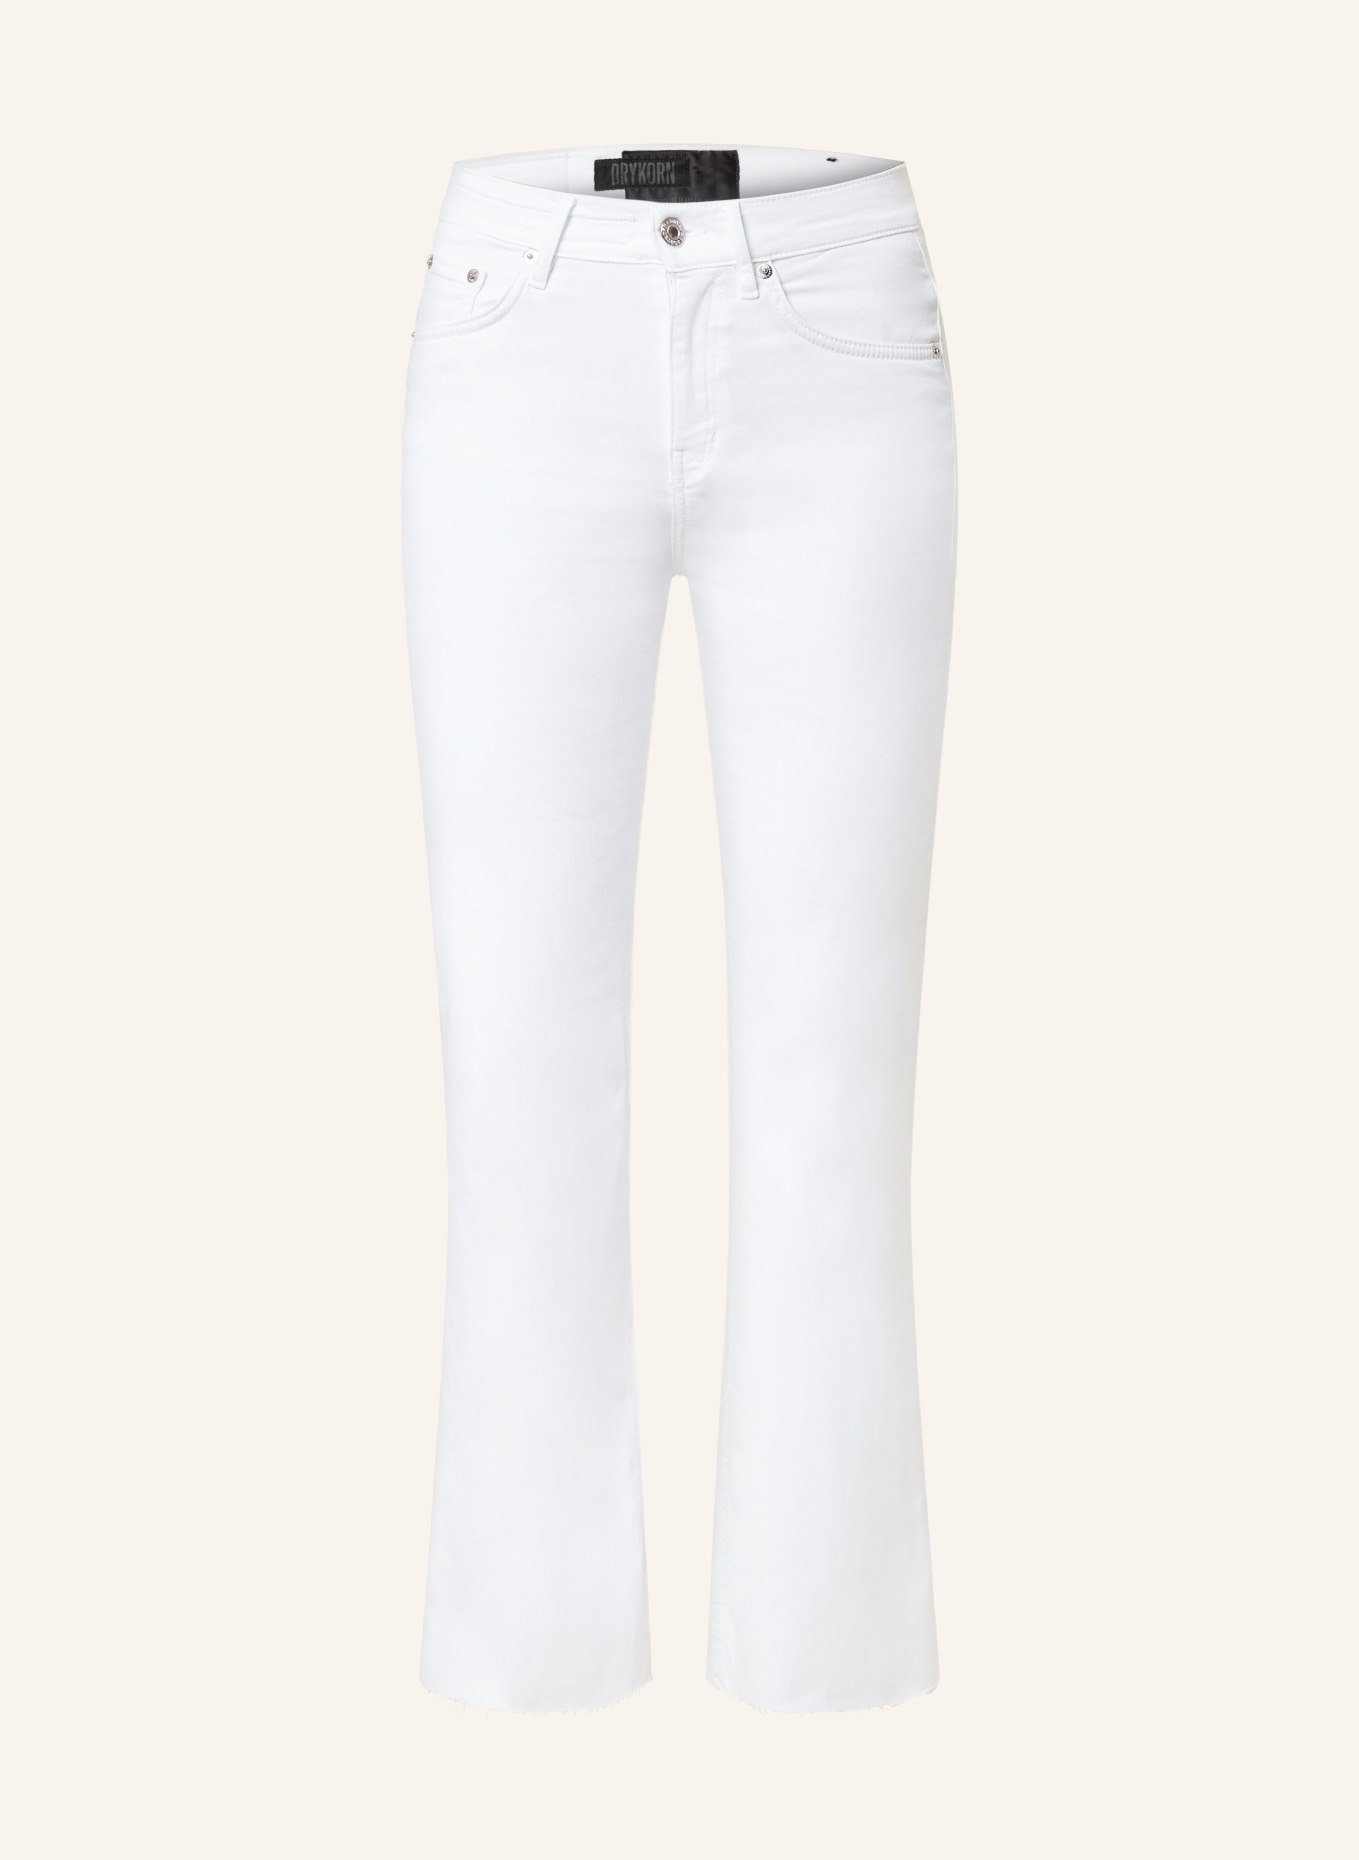 DRYKORN Flared Jeans FAR, Farbe: 6000 weiss (Bild 1)